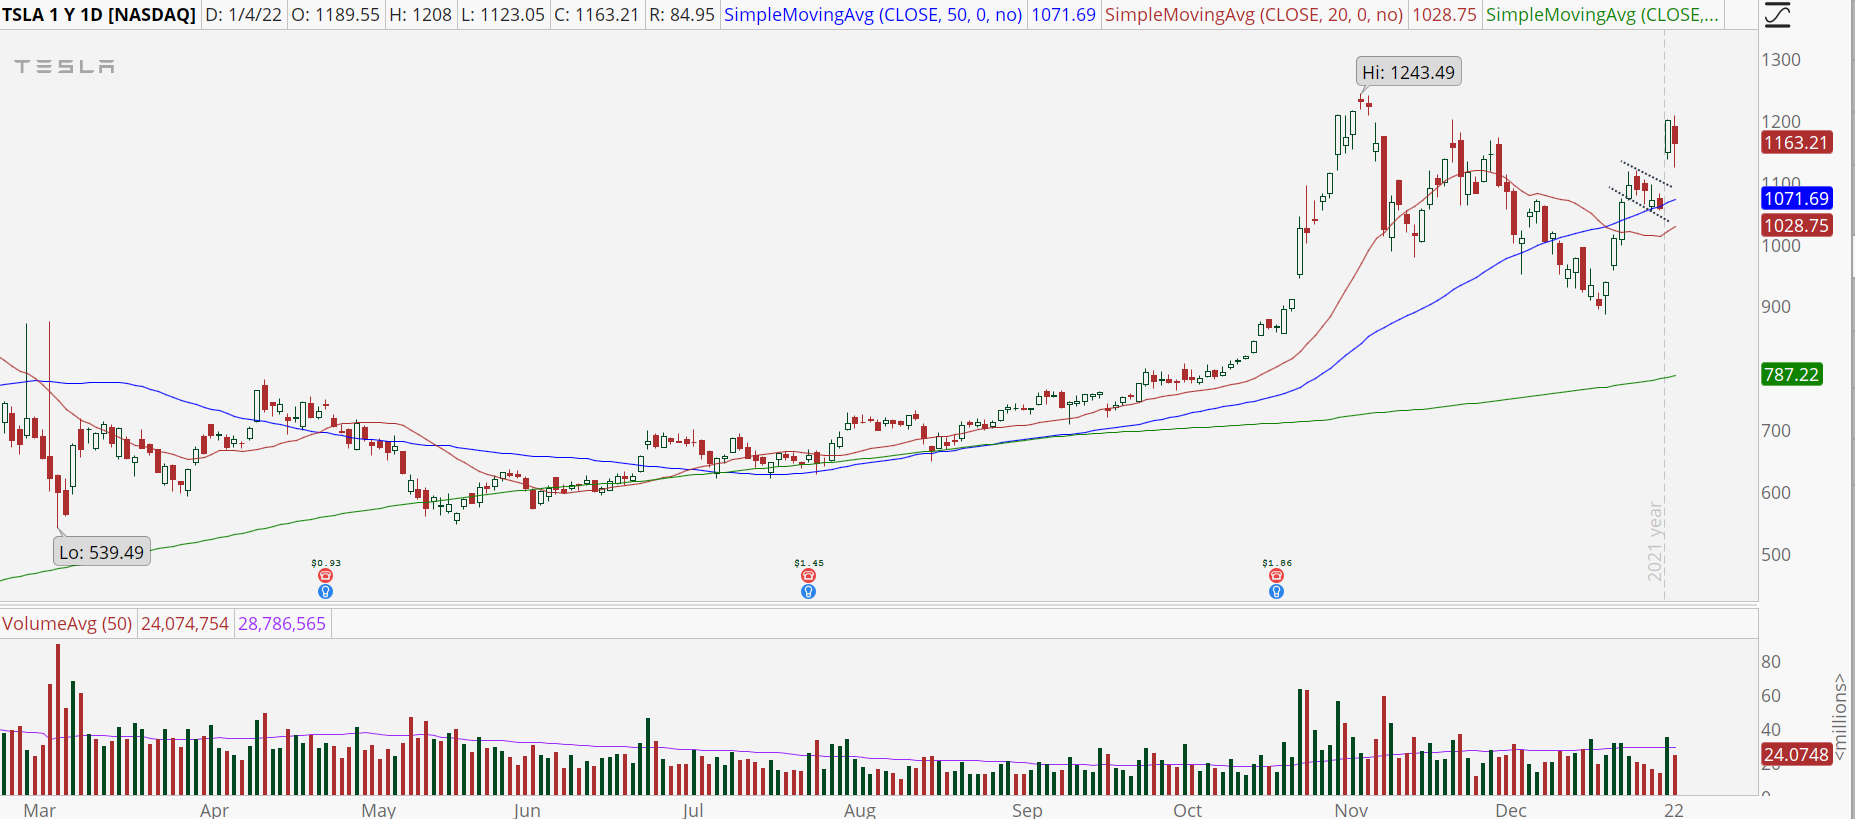 Tesla (TSLA) daily stock chart with bull flag pattern